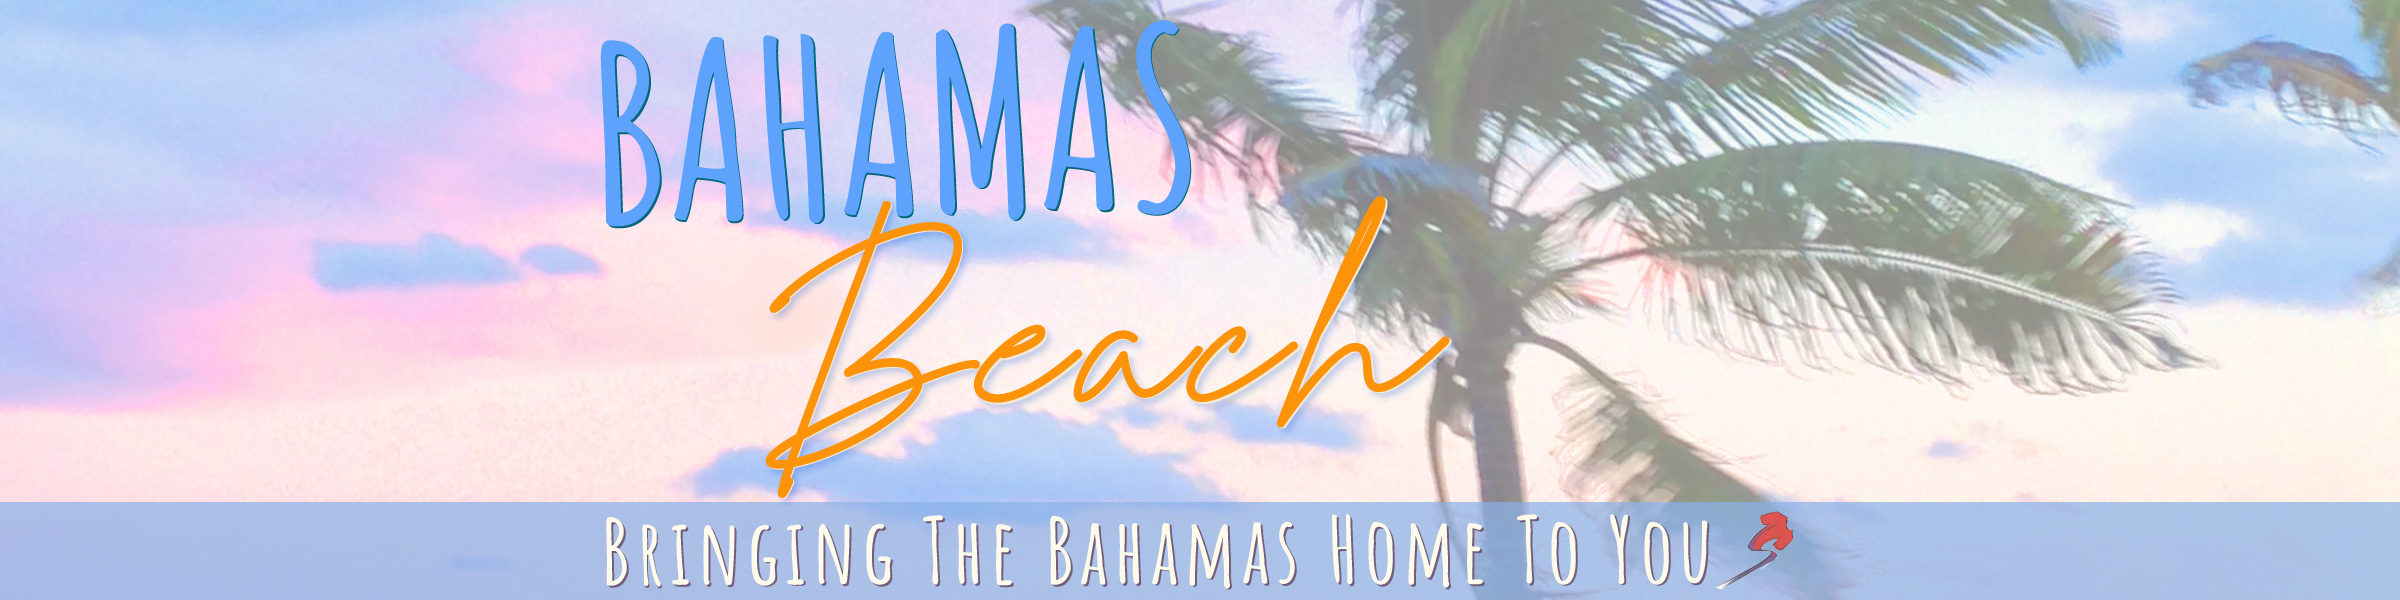 Bahamas Beach by Island Express